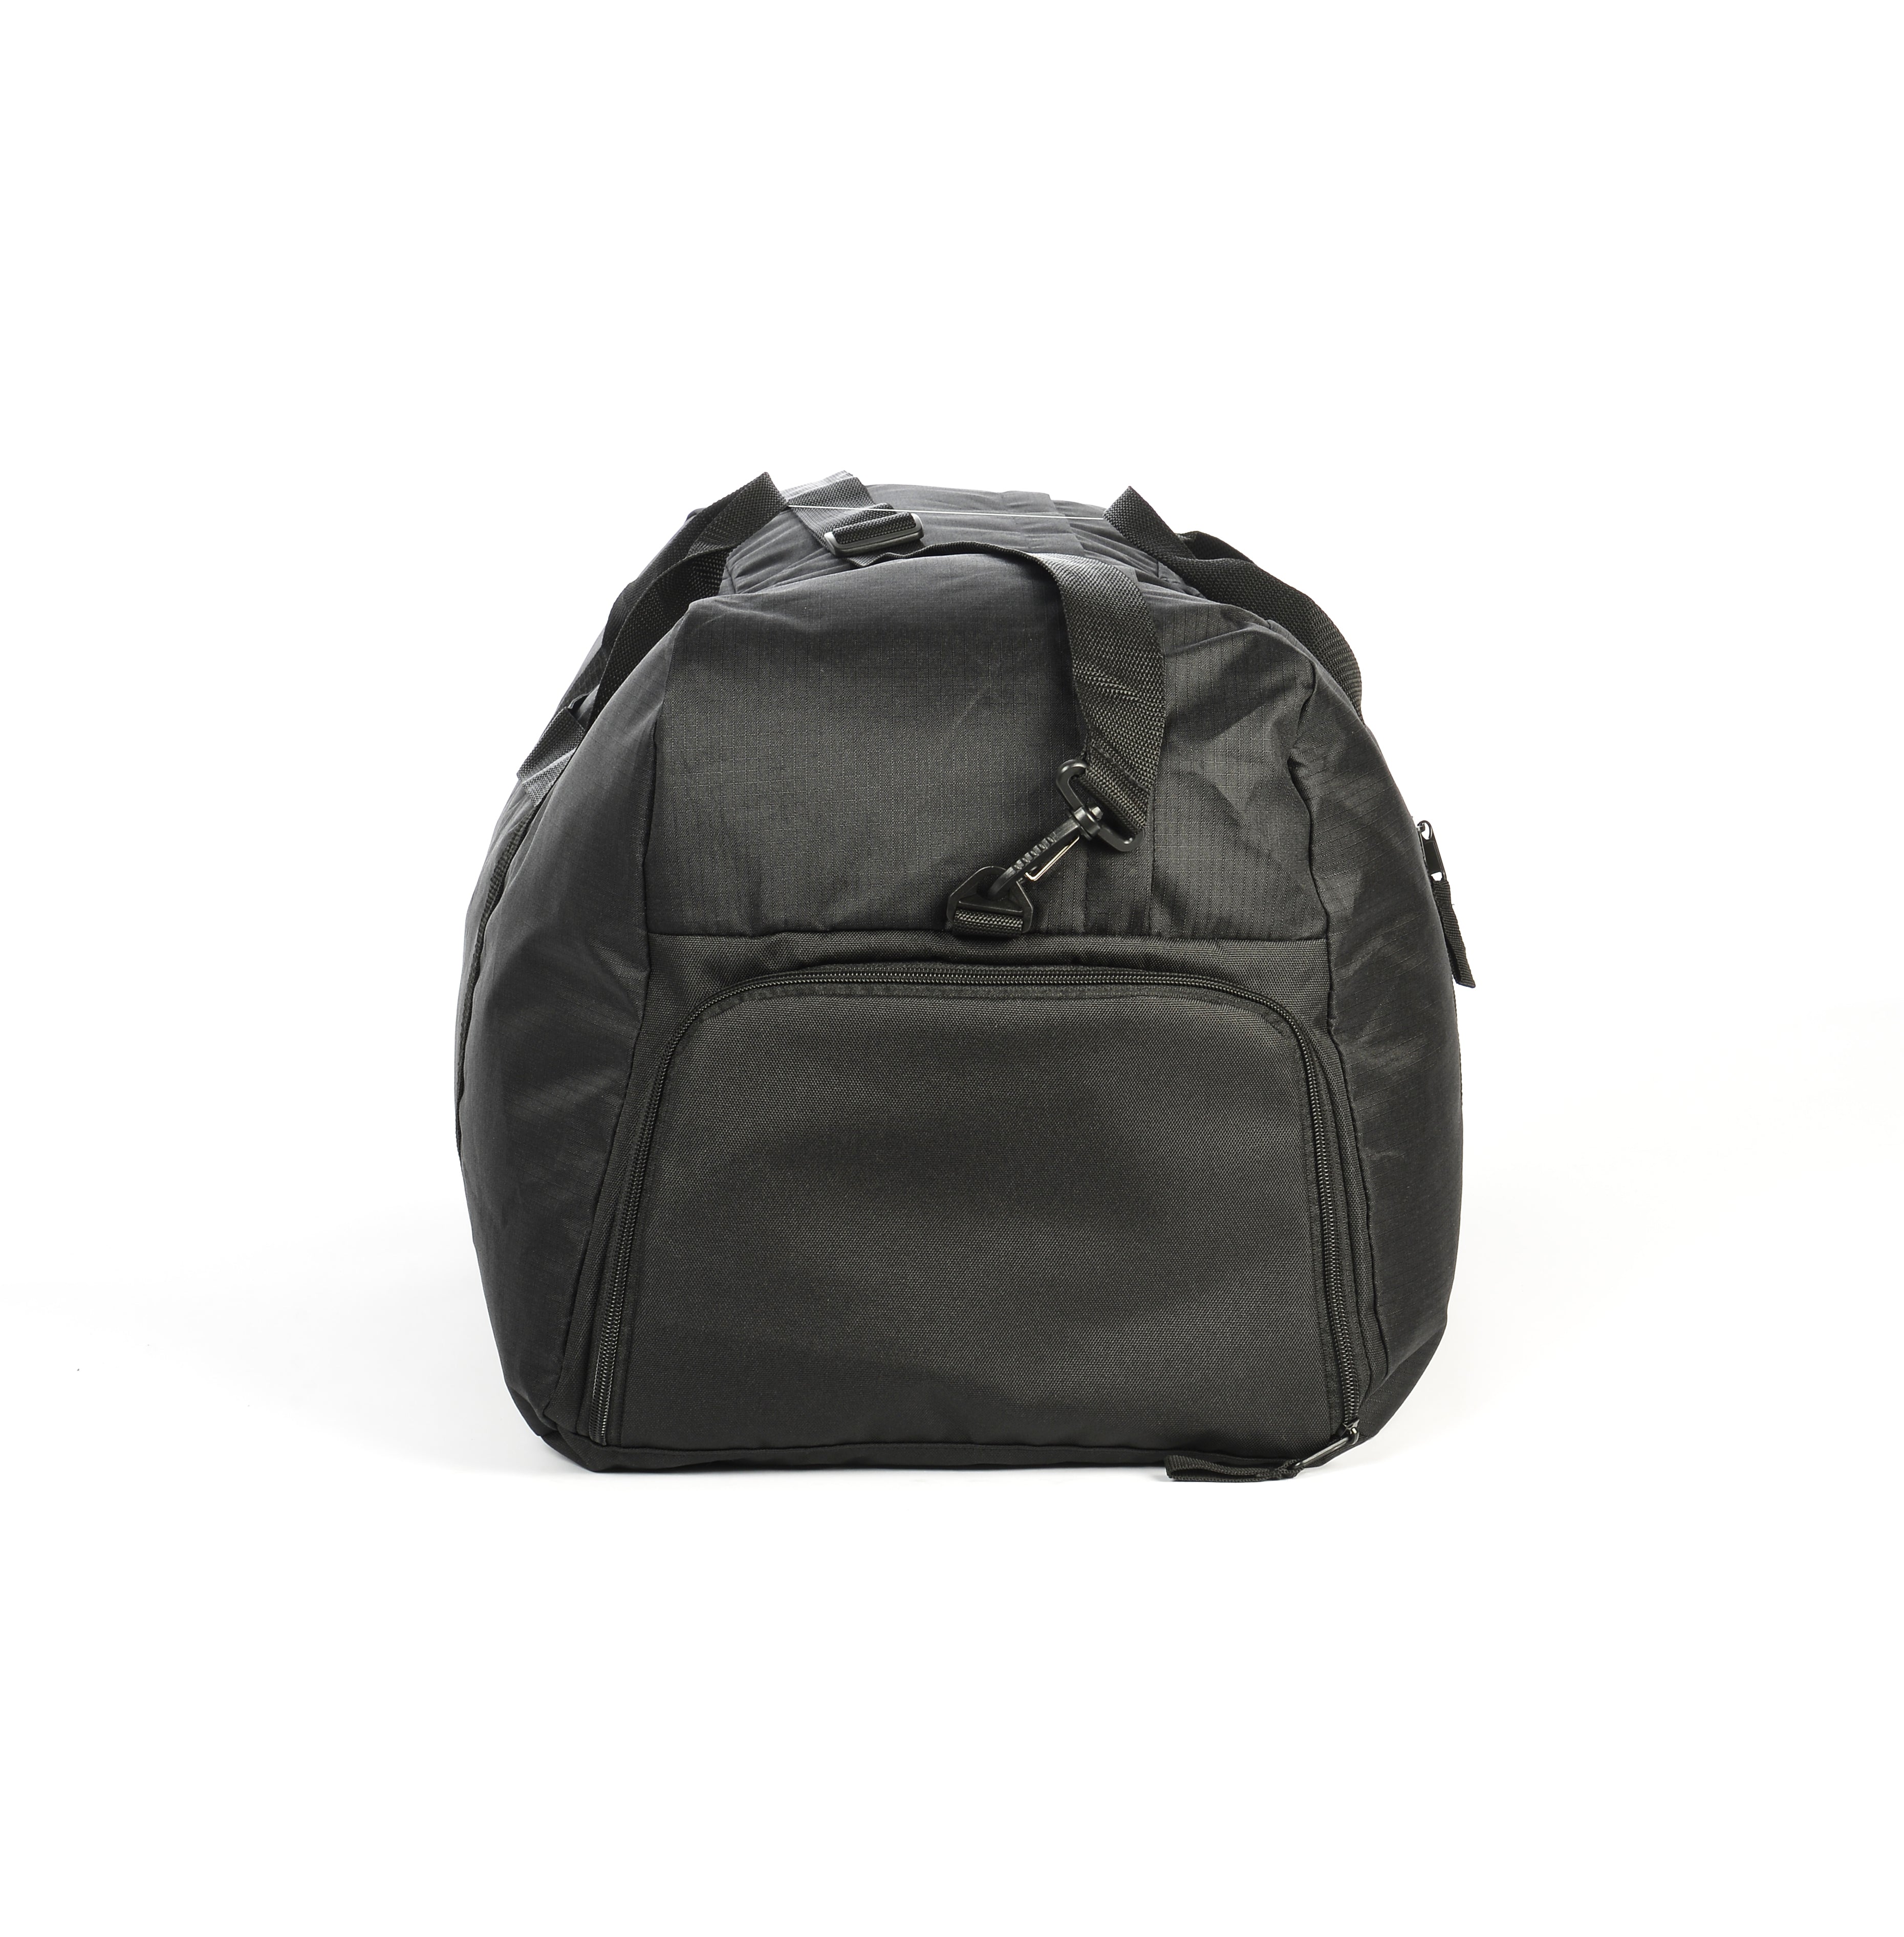 Rugged Foldable Bag 54L Black